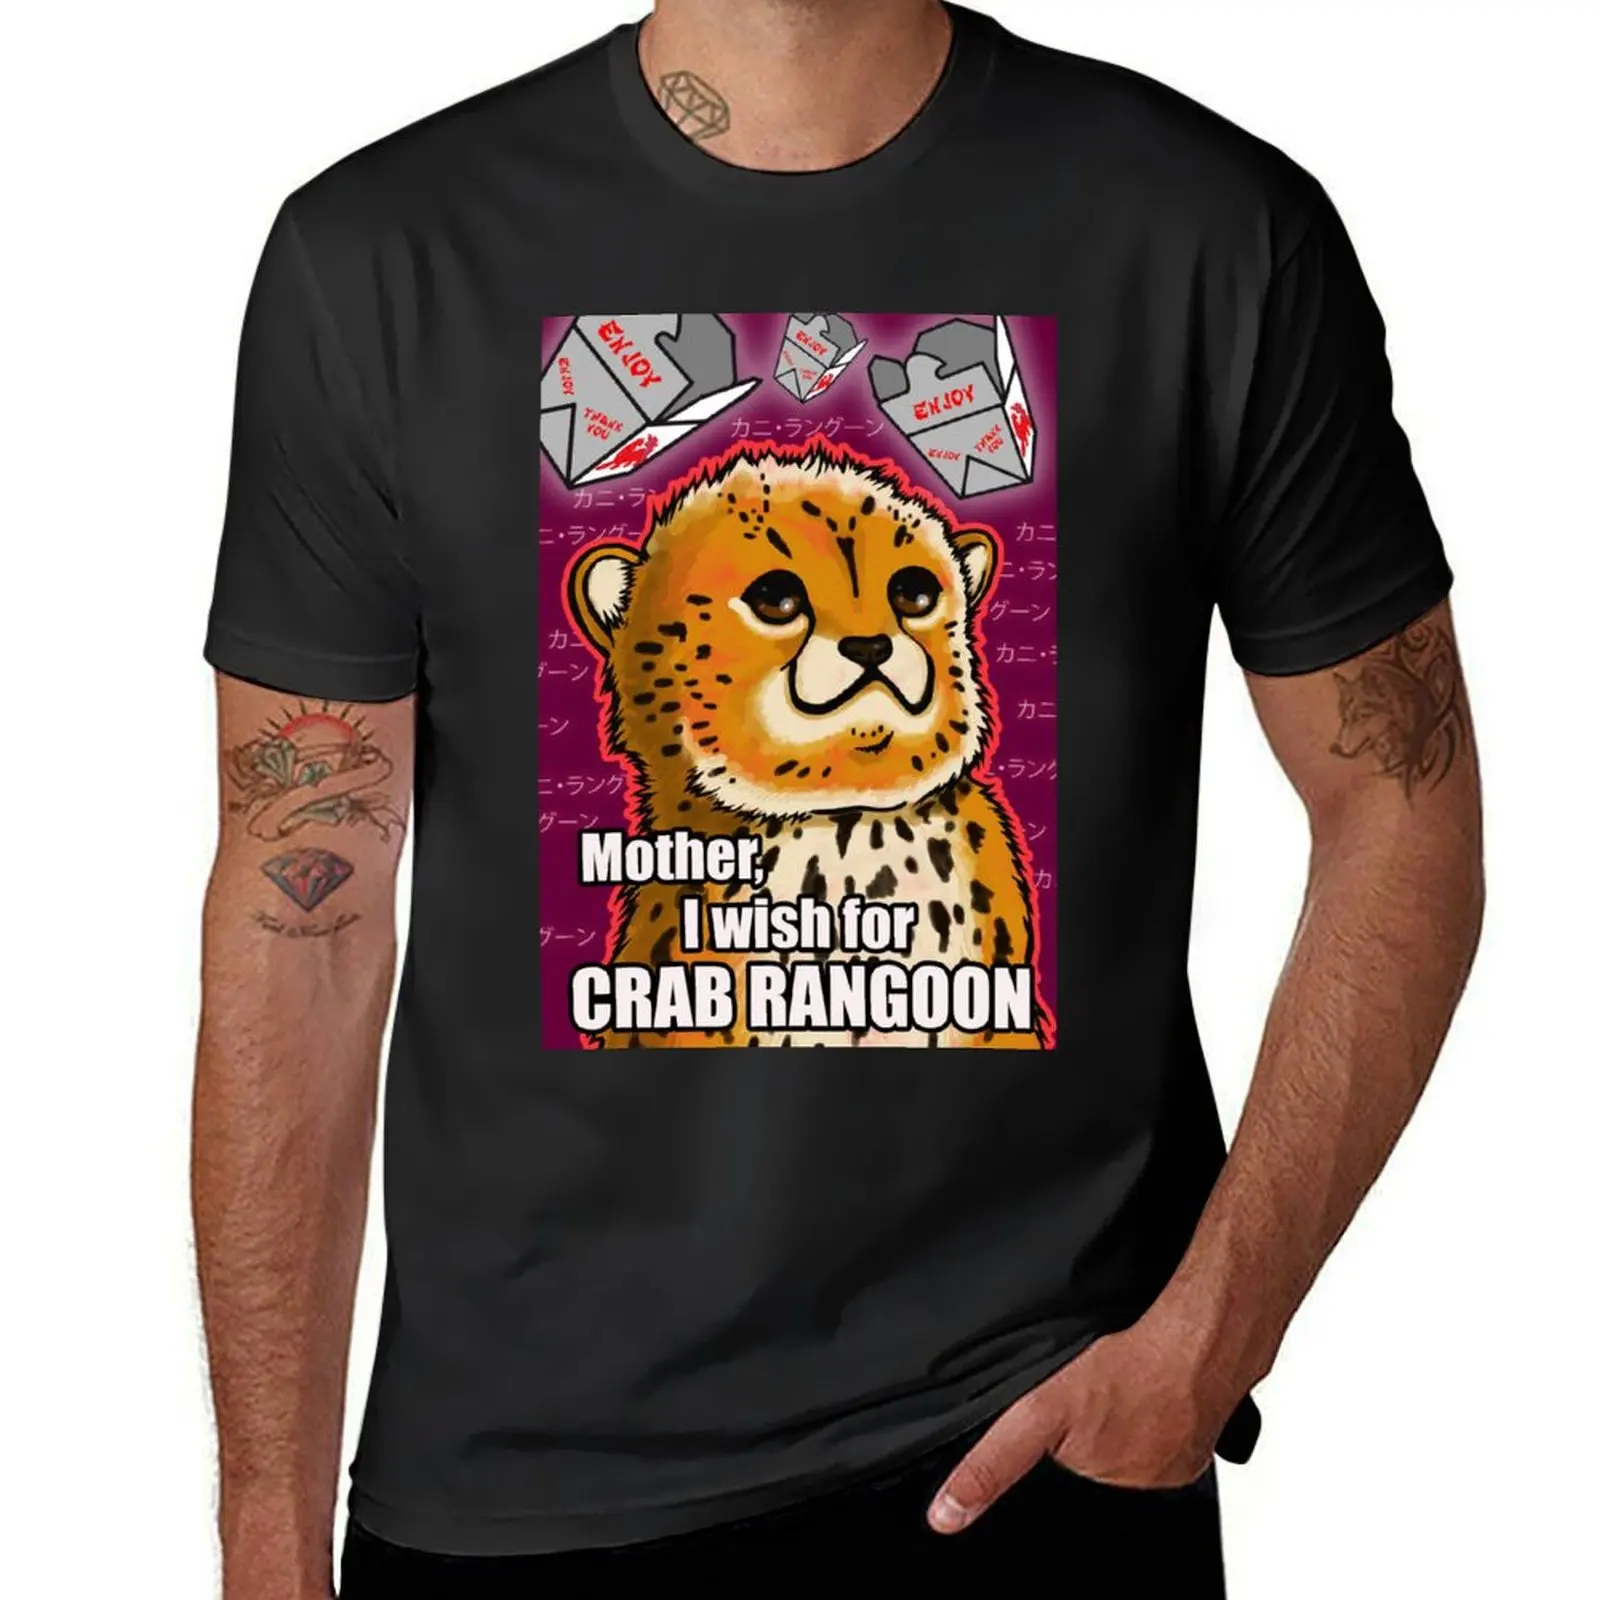 Madre, I wish for Crab Rangoon t-shirt manica corta tee anime clothes blacks summer top t shirt uomo